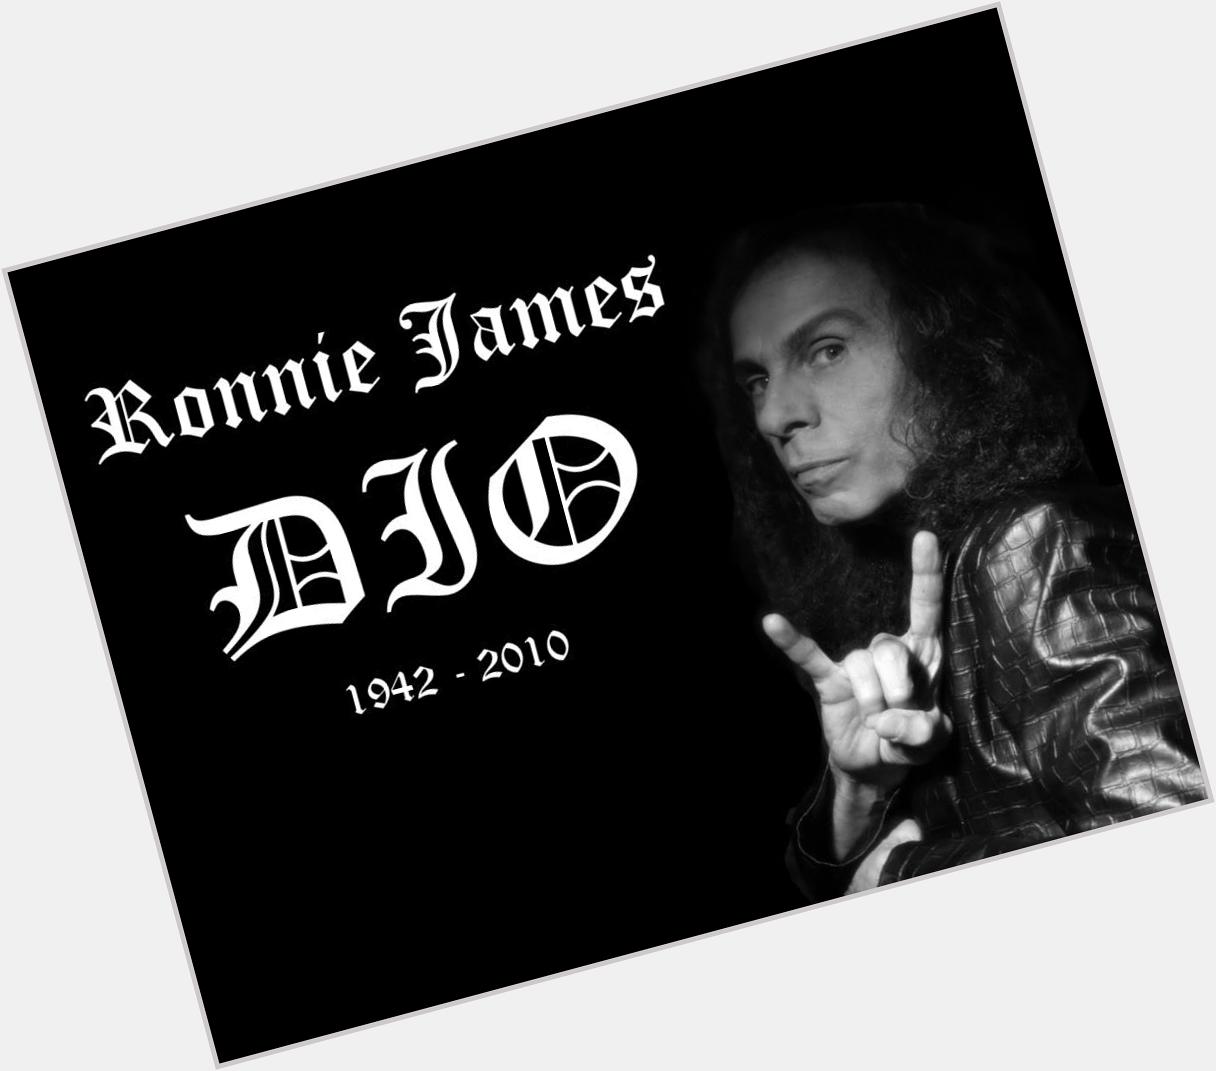 Happy Birthday Ronnie James Dio \\m/ RIP 